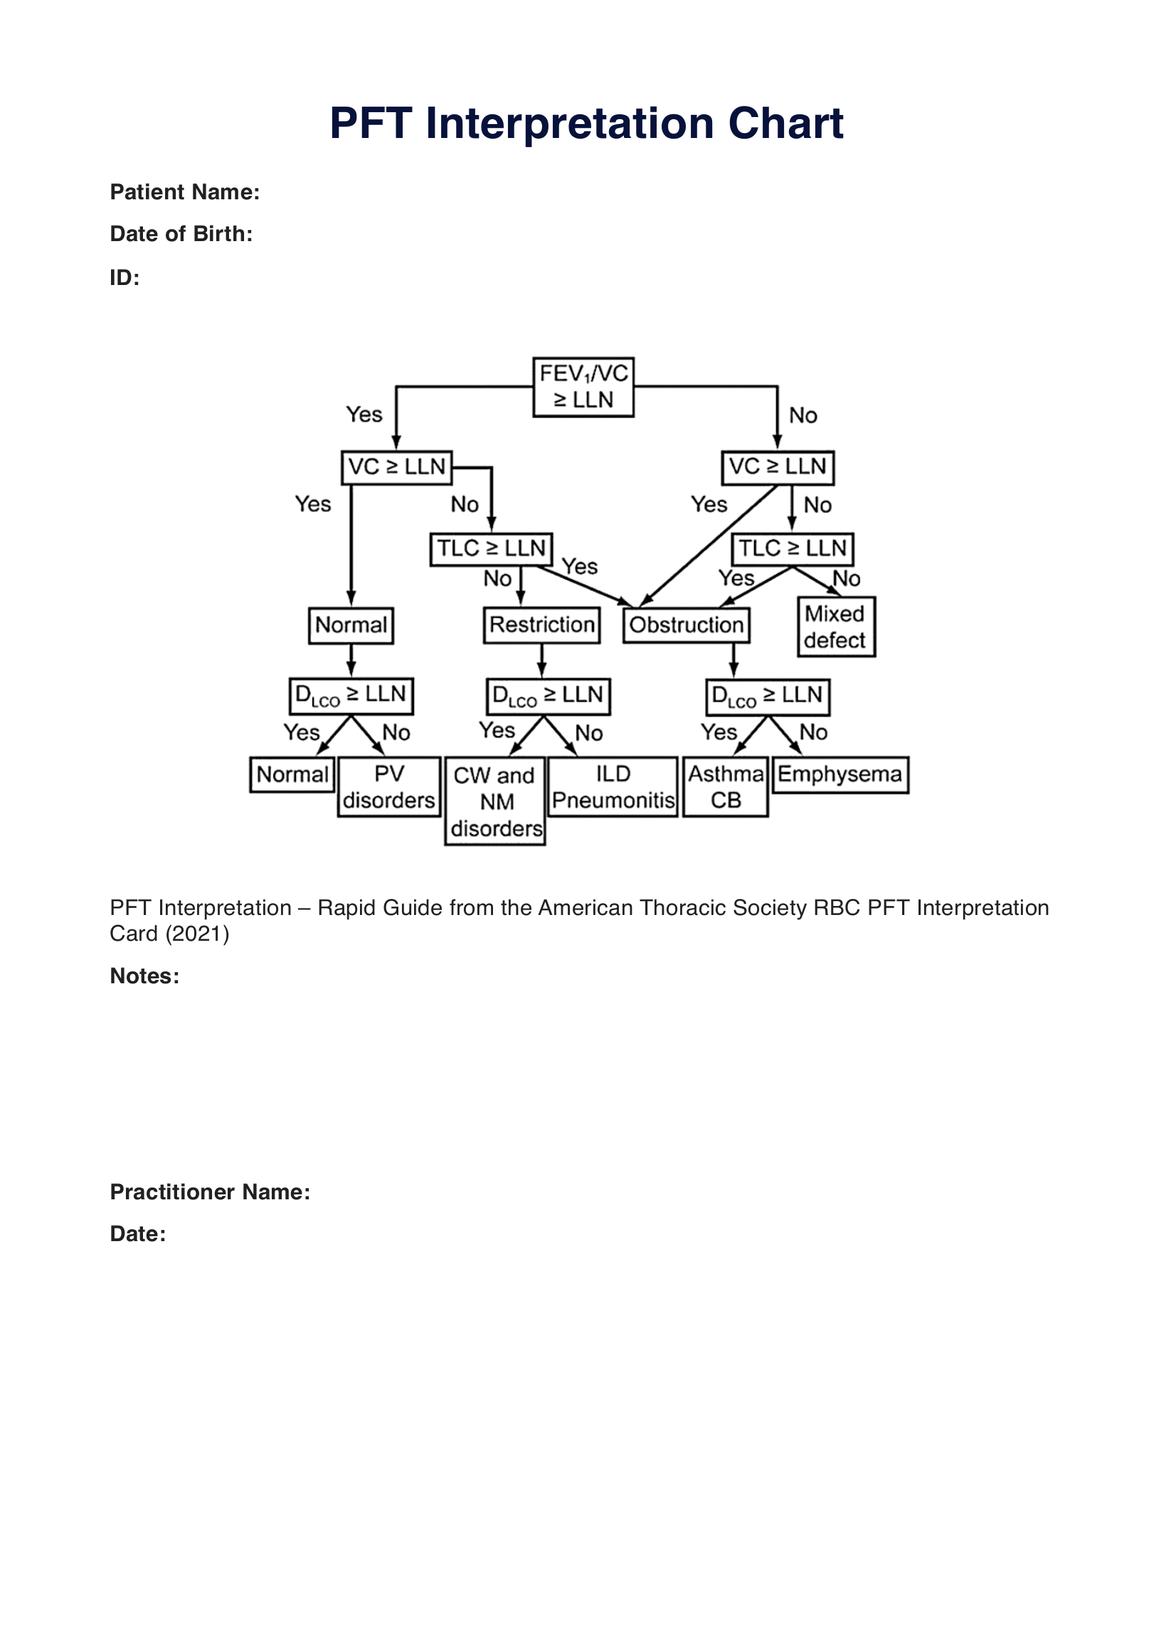 PFT Interpretation Chart PDF Example